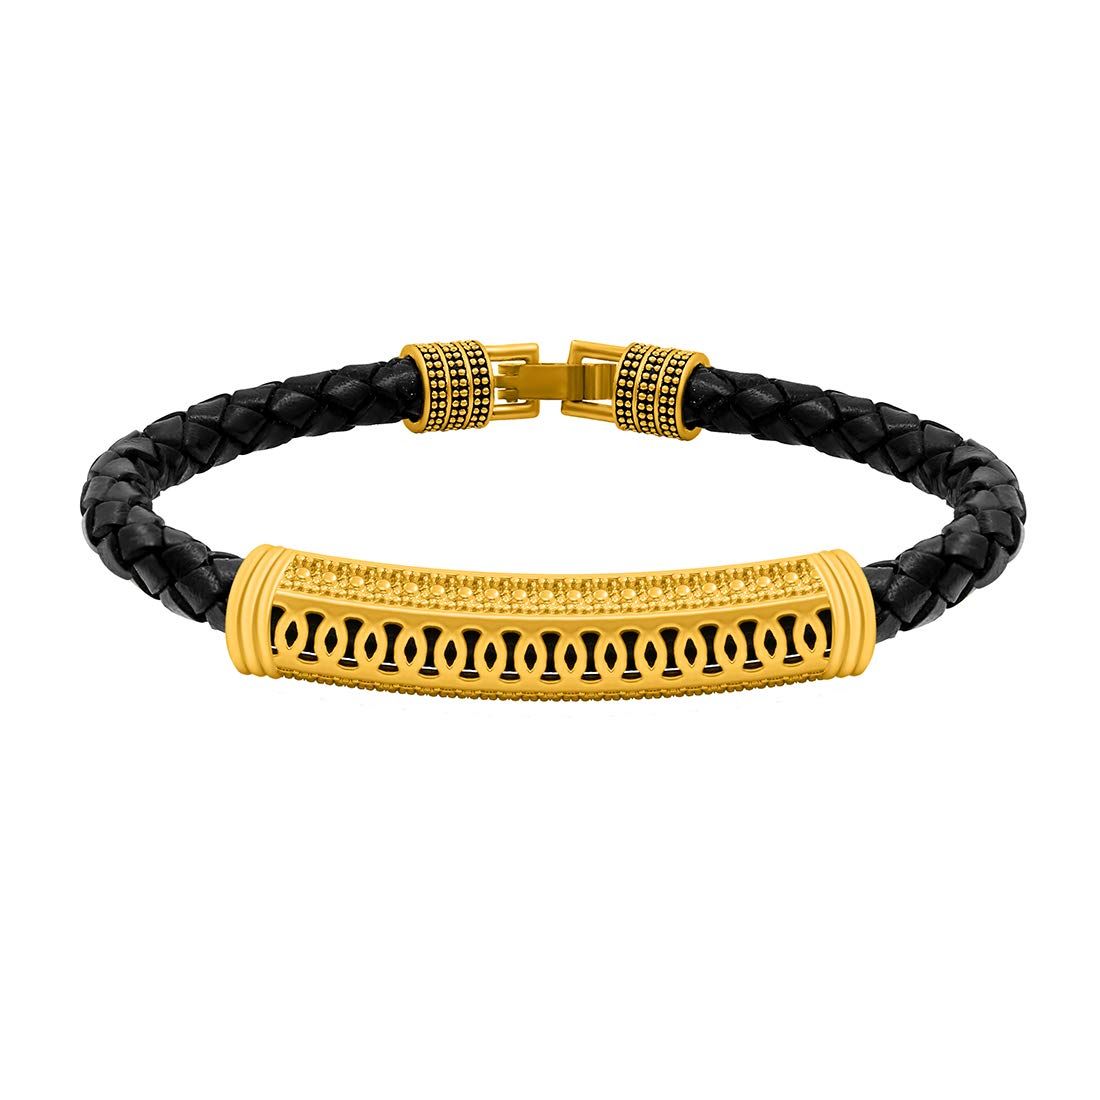 Buy 22k Gold Bracelet for Men Boy , Yellow Gold Bracelet, Unique Stylish  Design, Indian Gold Bracelet Jewelry for Gift Online in India - Etsy